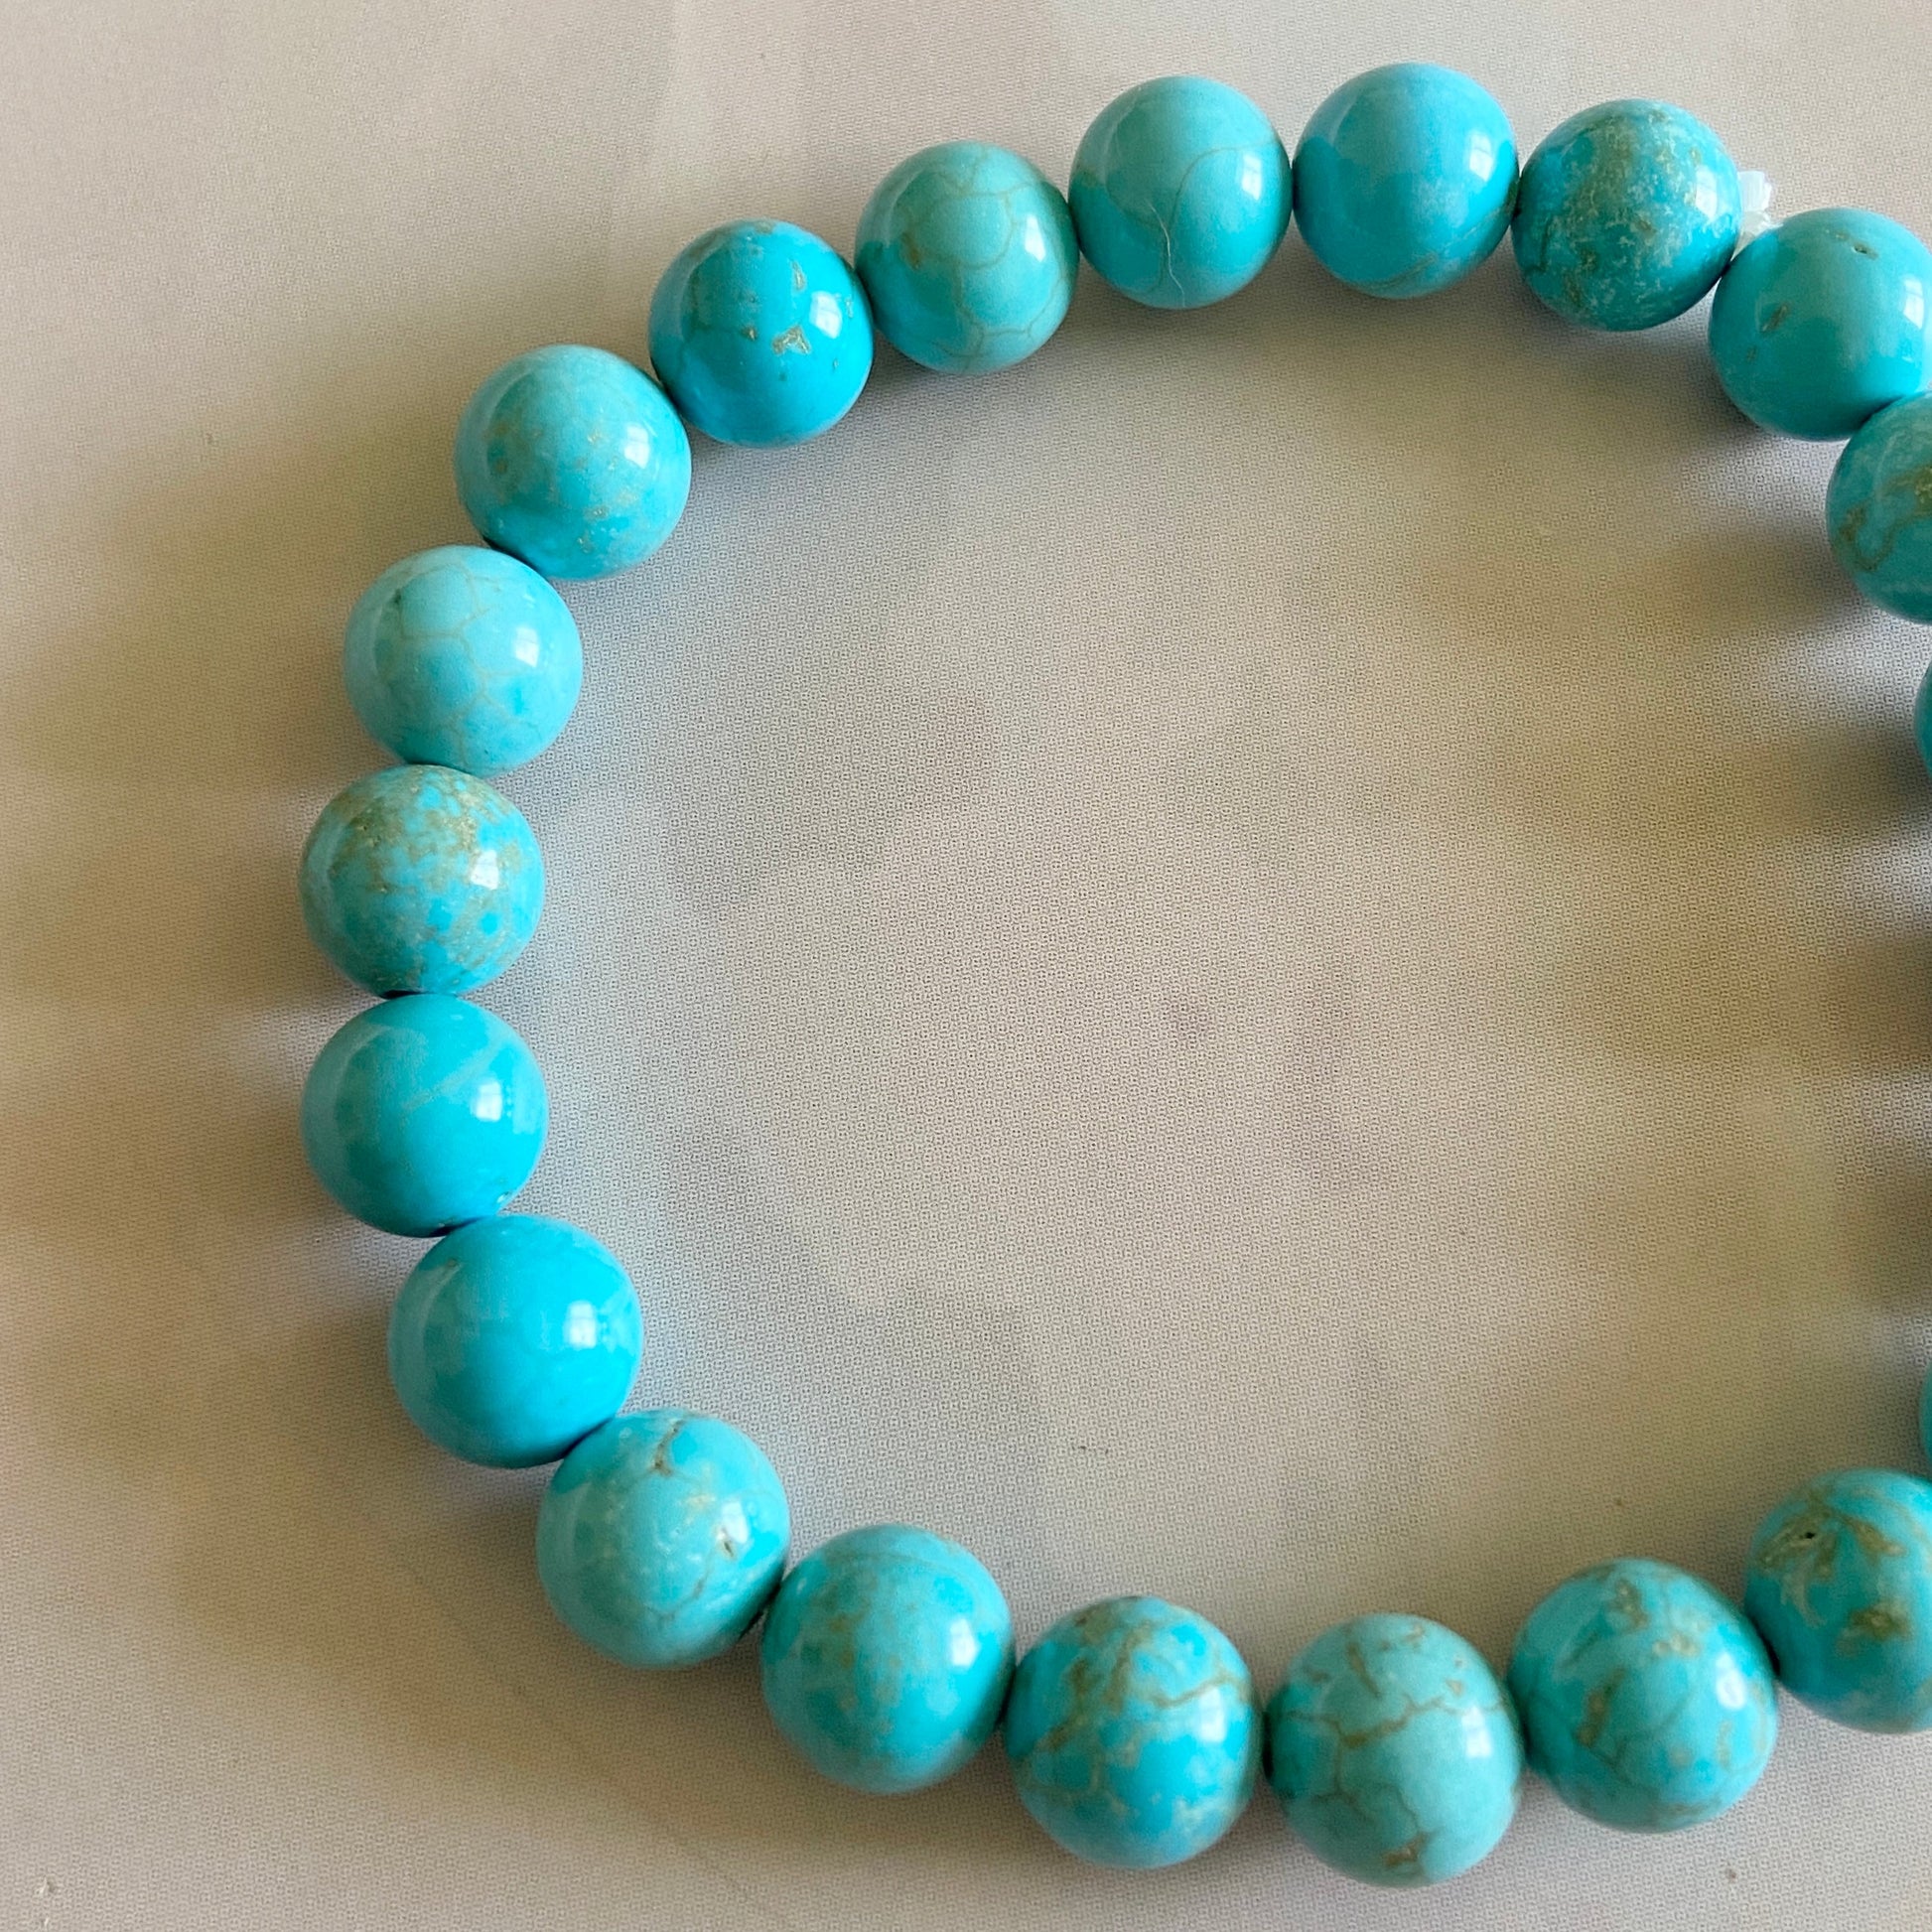 Synthetic Turquoise Bracelet (Manmade) - Stone Of Protection & Mediatation Crystal Stones